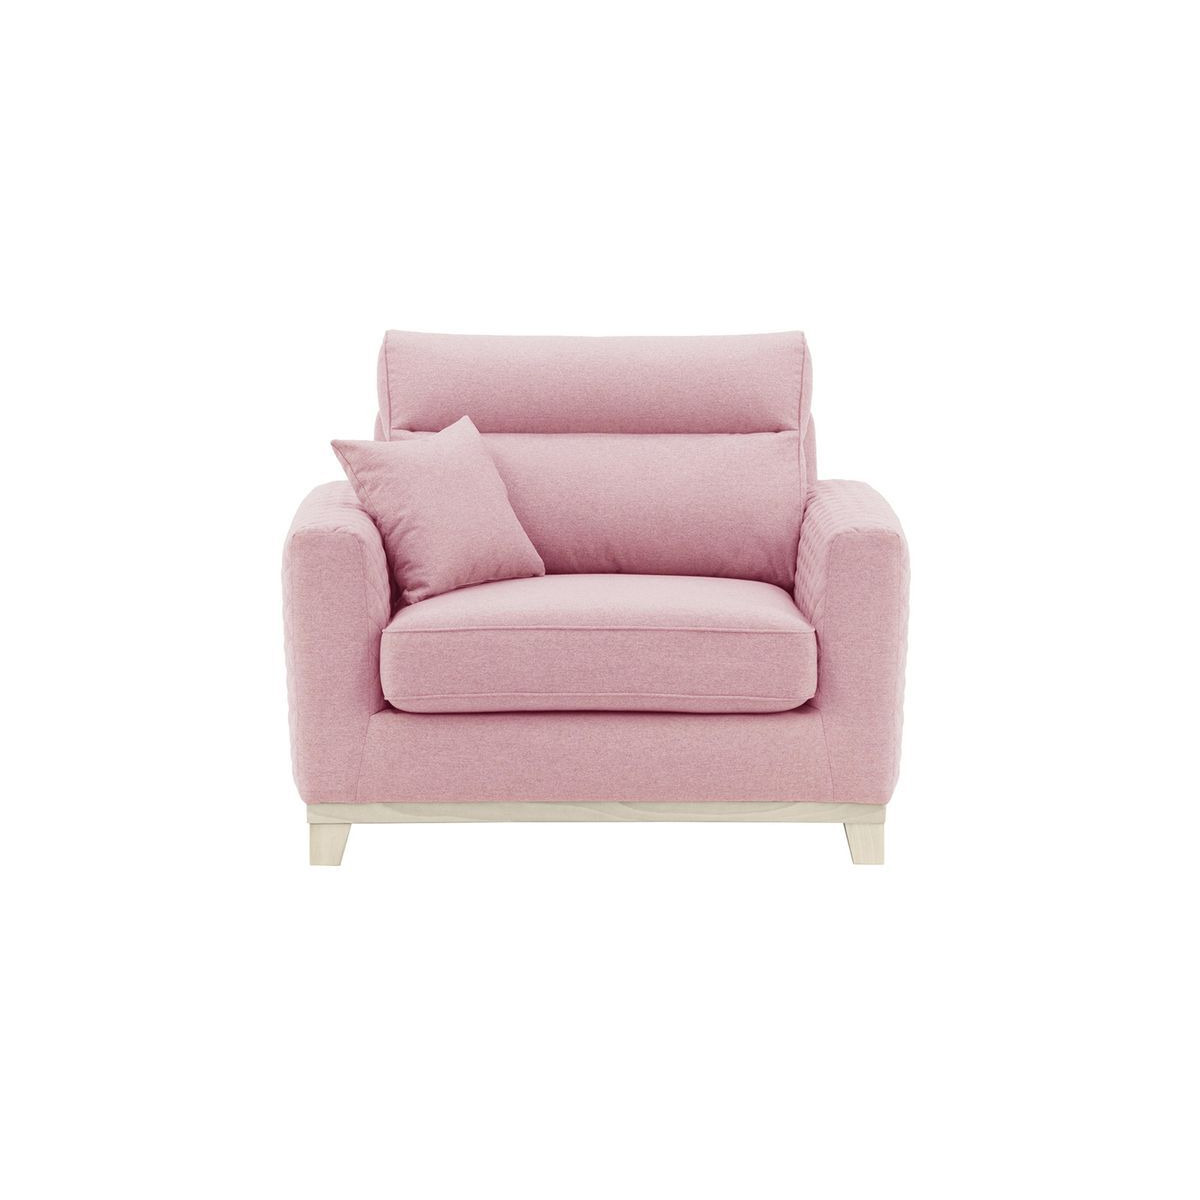 Belfort Armchair, pink, Leg colour: white - image 1